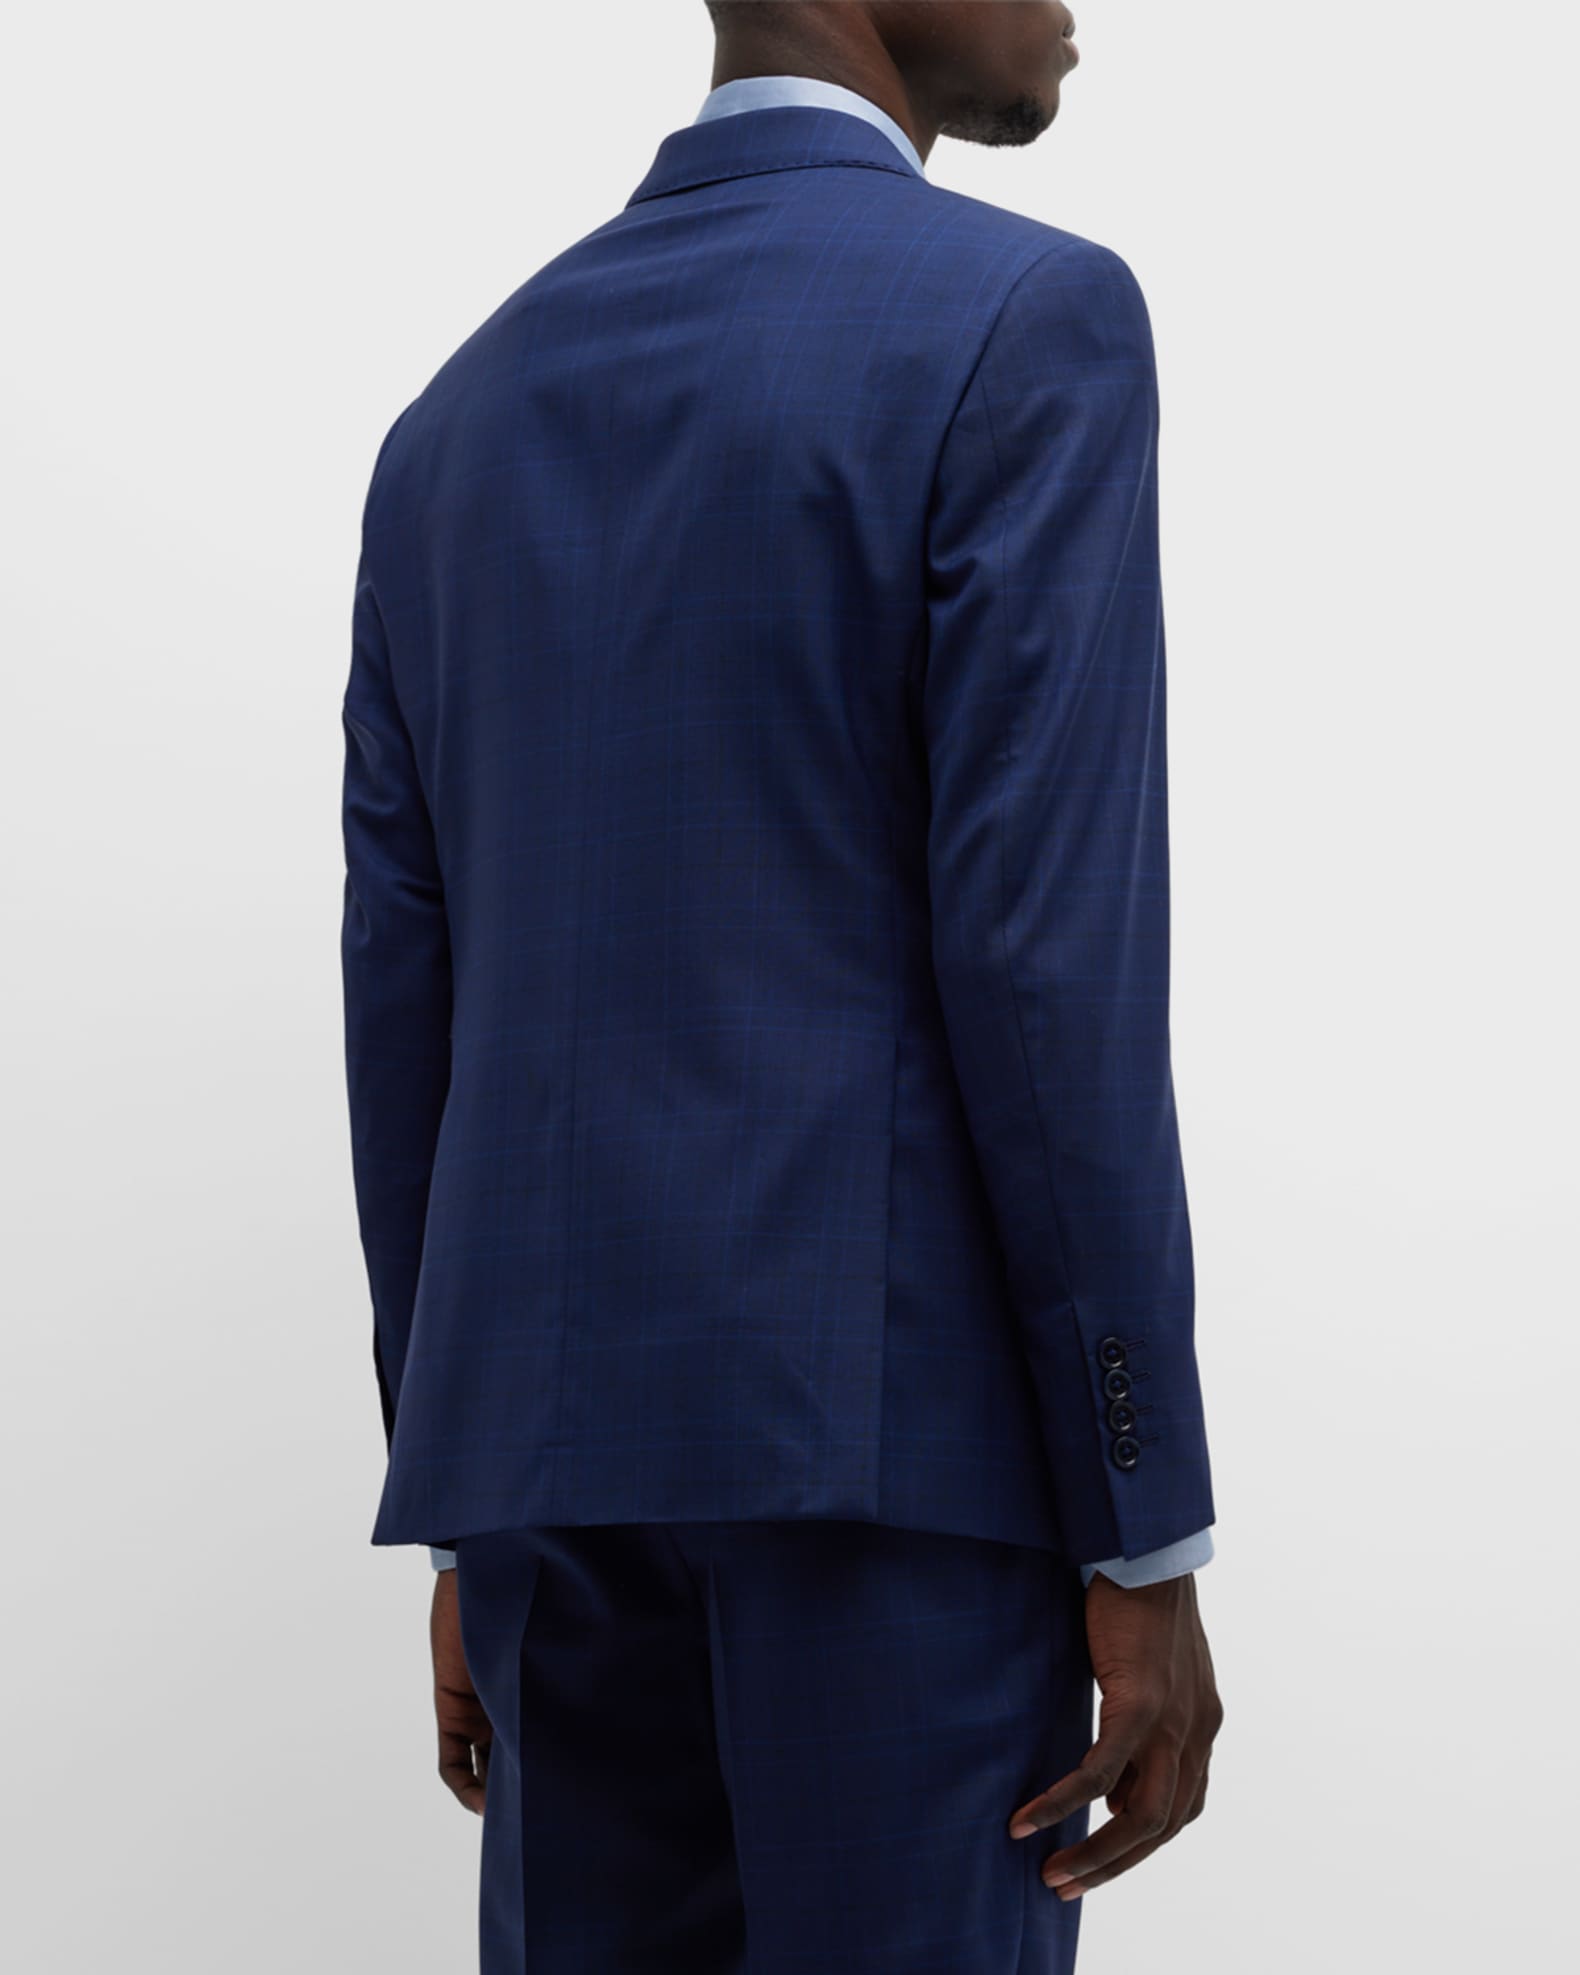 Emporio Armani Men's Windowpane Plaid Wool Suit | Neiman Marcus